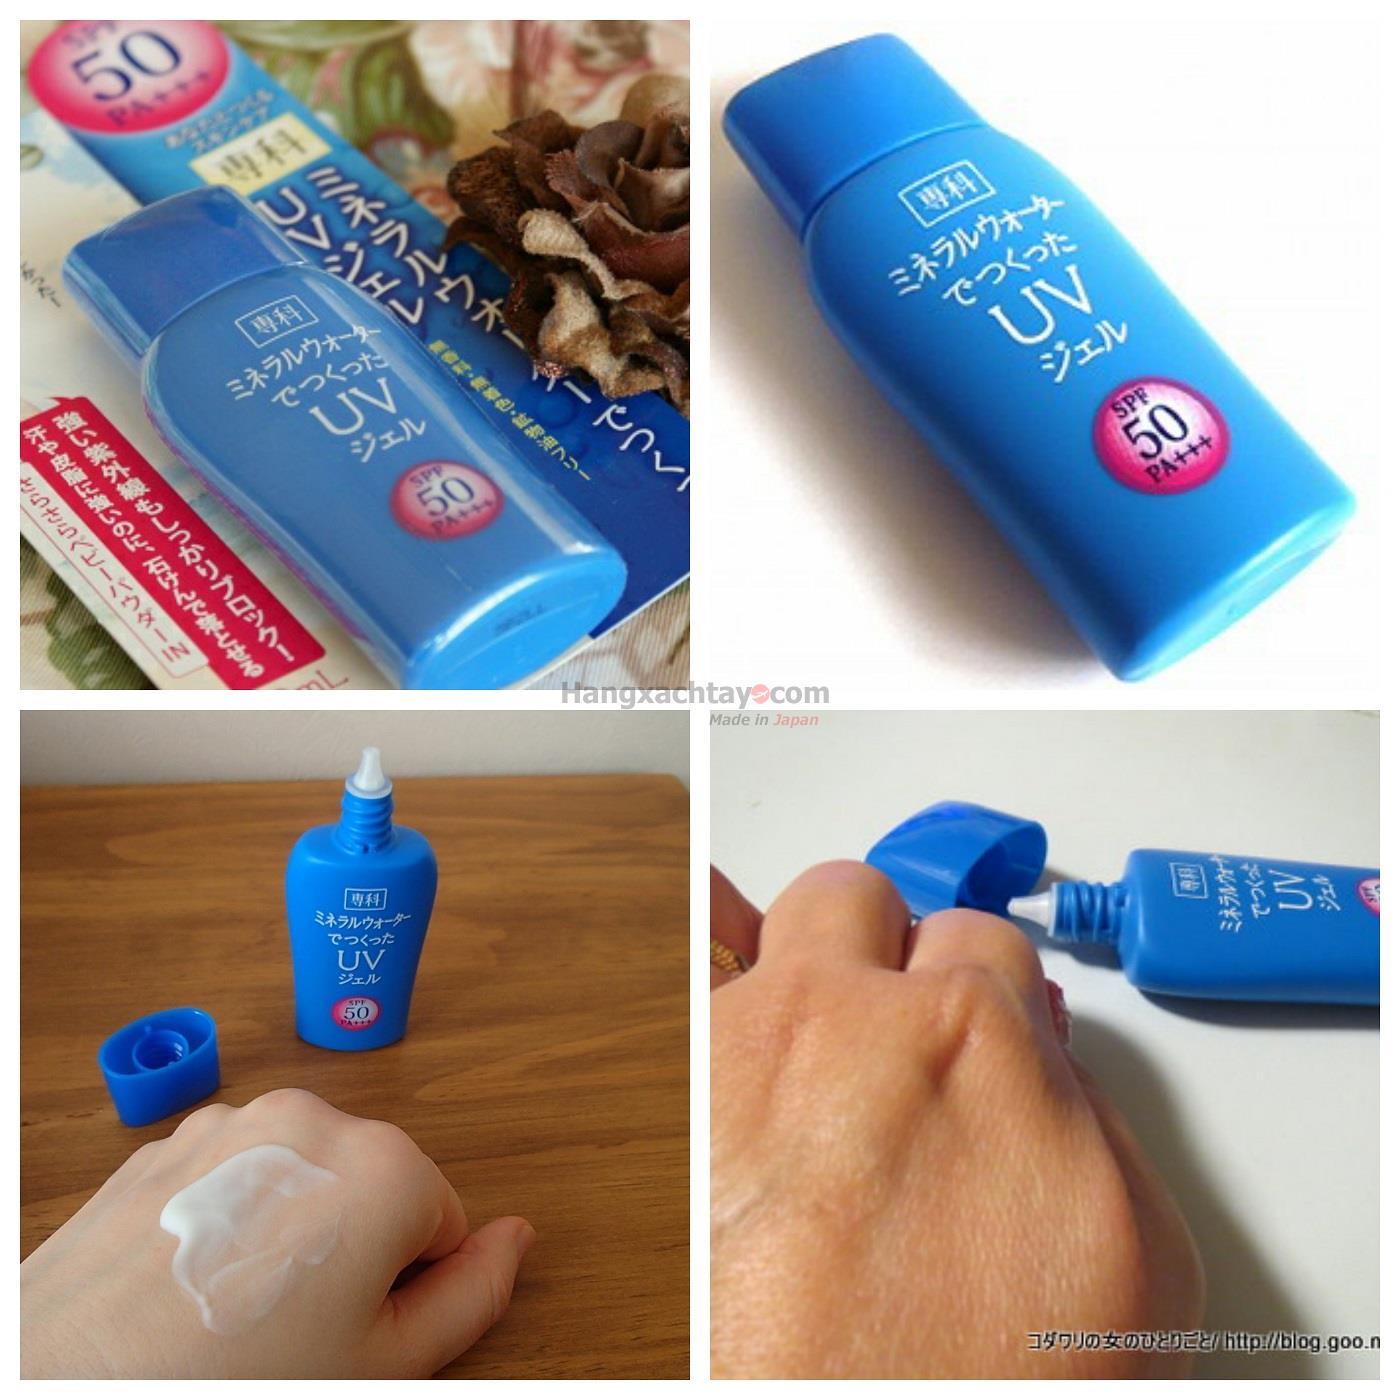 Kem chống nắng Shiseido Mineral Water Senka 50 PA+++ 40ml